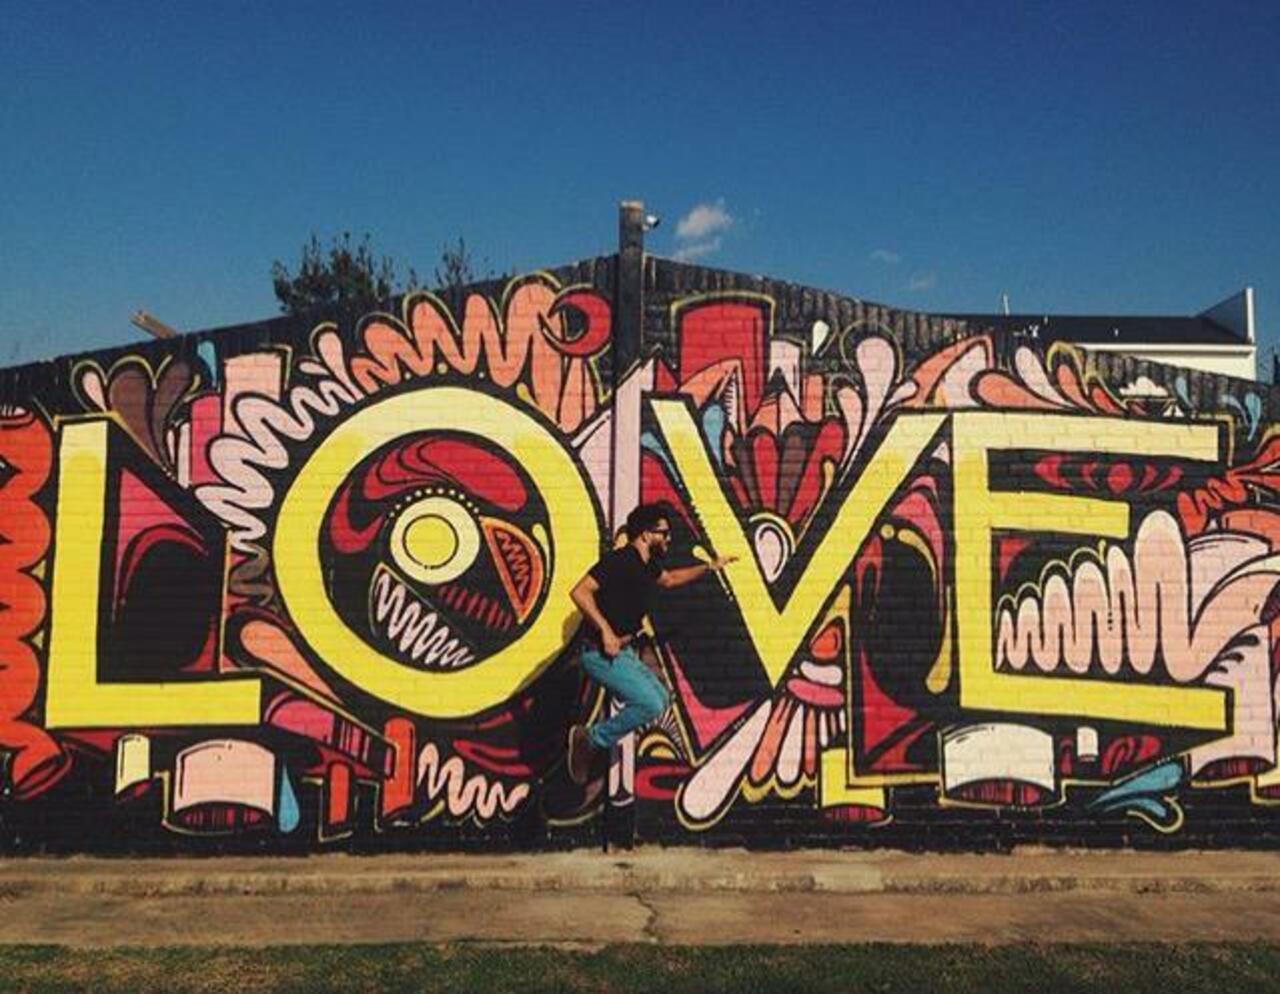 Love ❤️ Street Art by WileyArt #art #graffiti #mural #streetart http://t.co/CPS64cxW4T http://twitter.com/charlesjackso14/status/649560665364037632